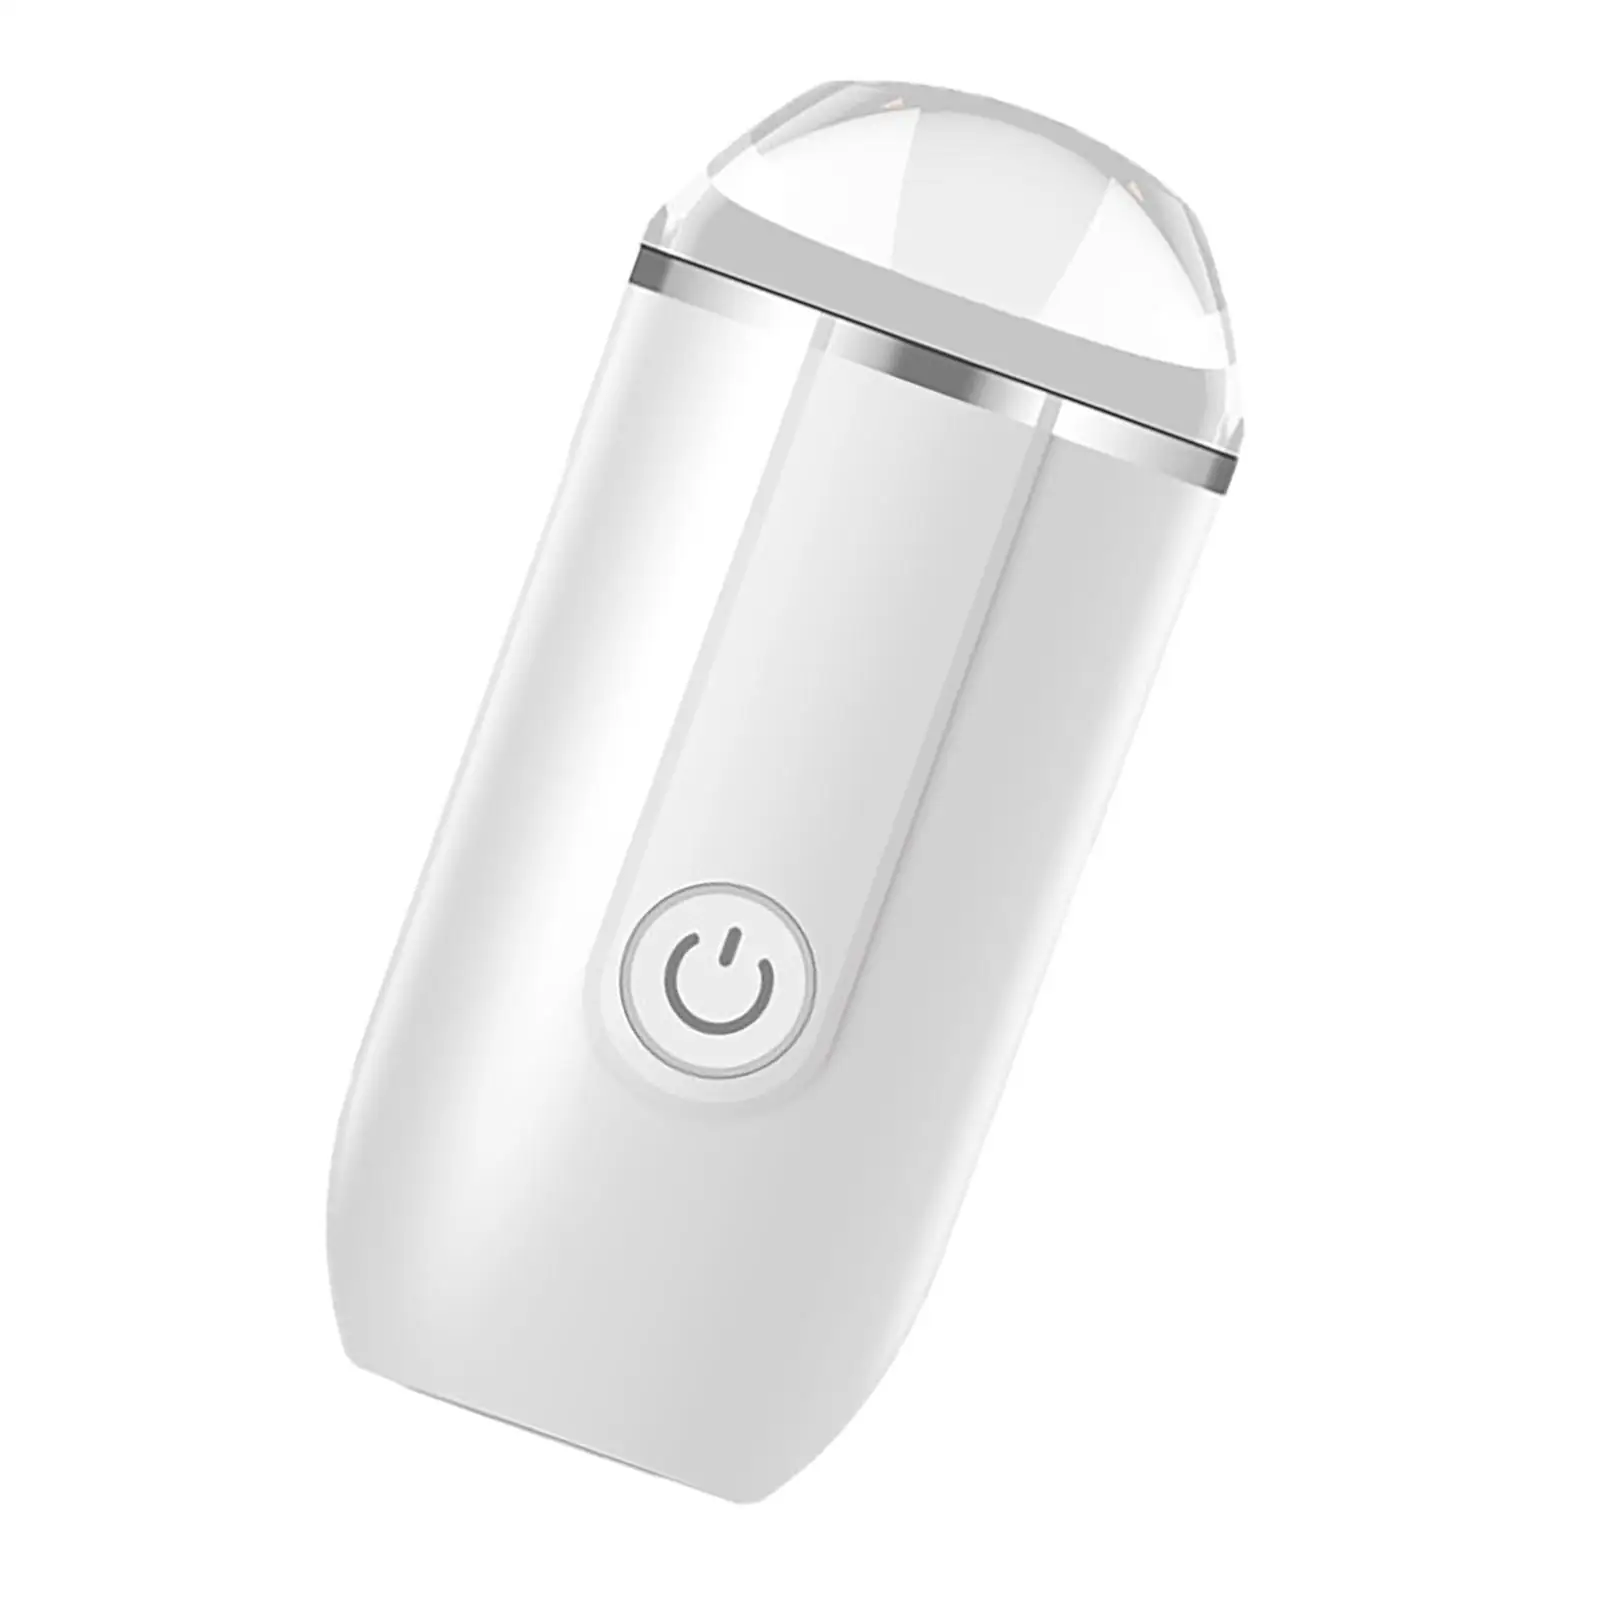 Pocket Size Travel Electric Razor Washable USB Charging Silent for Men Gift